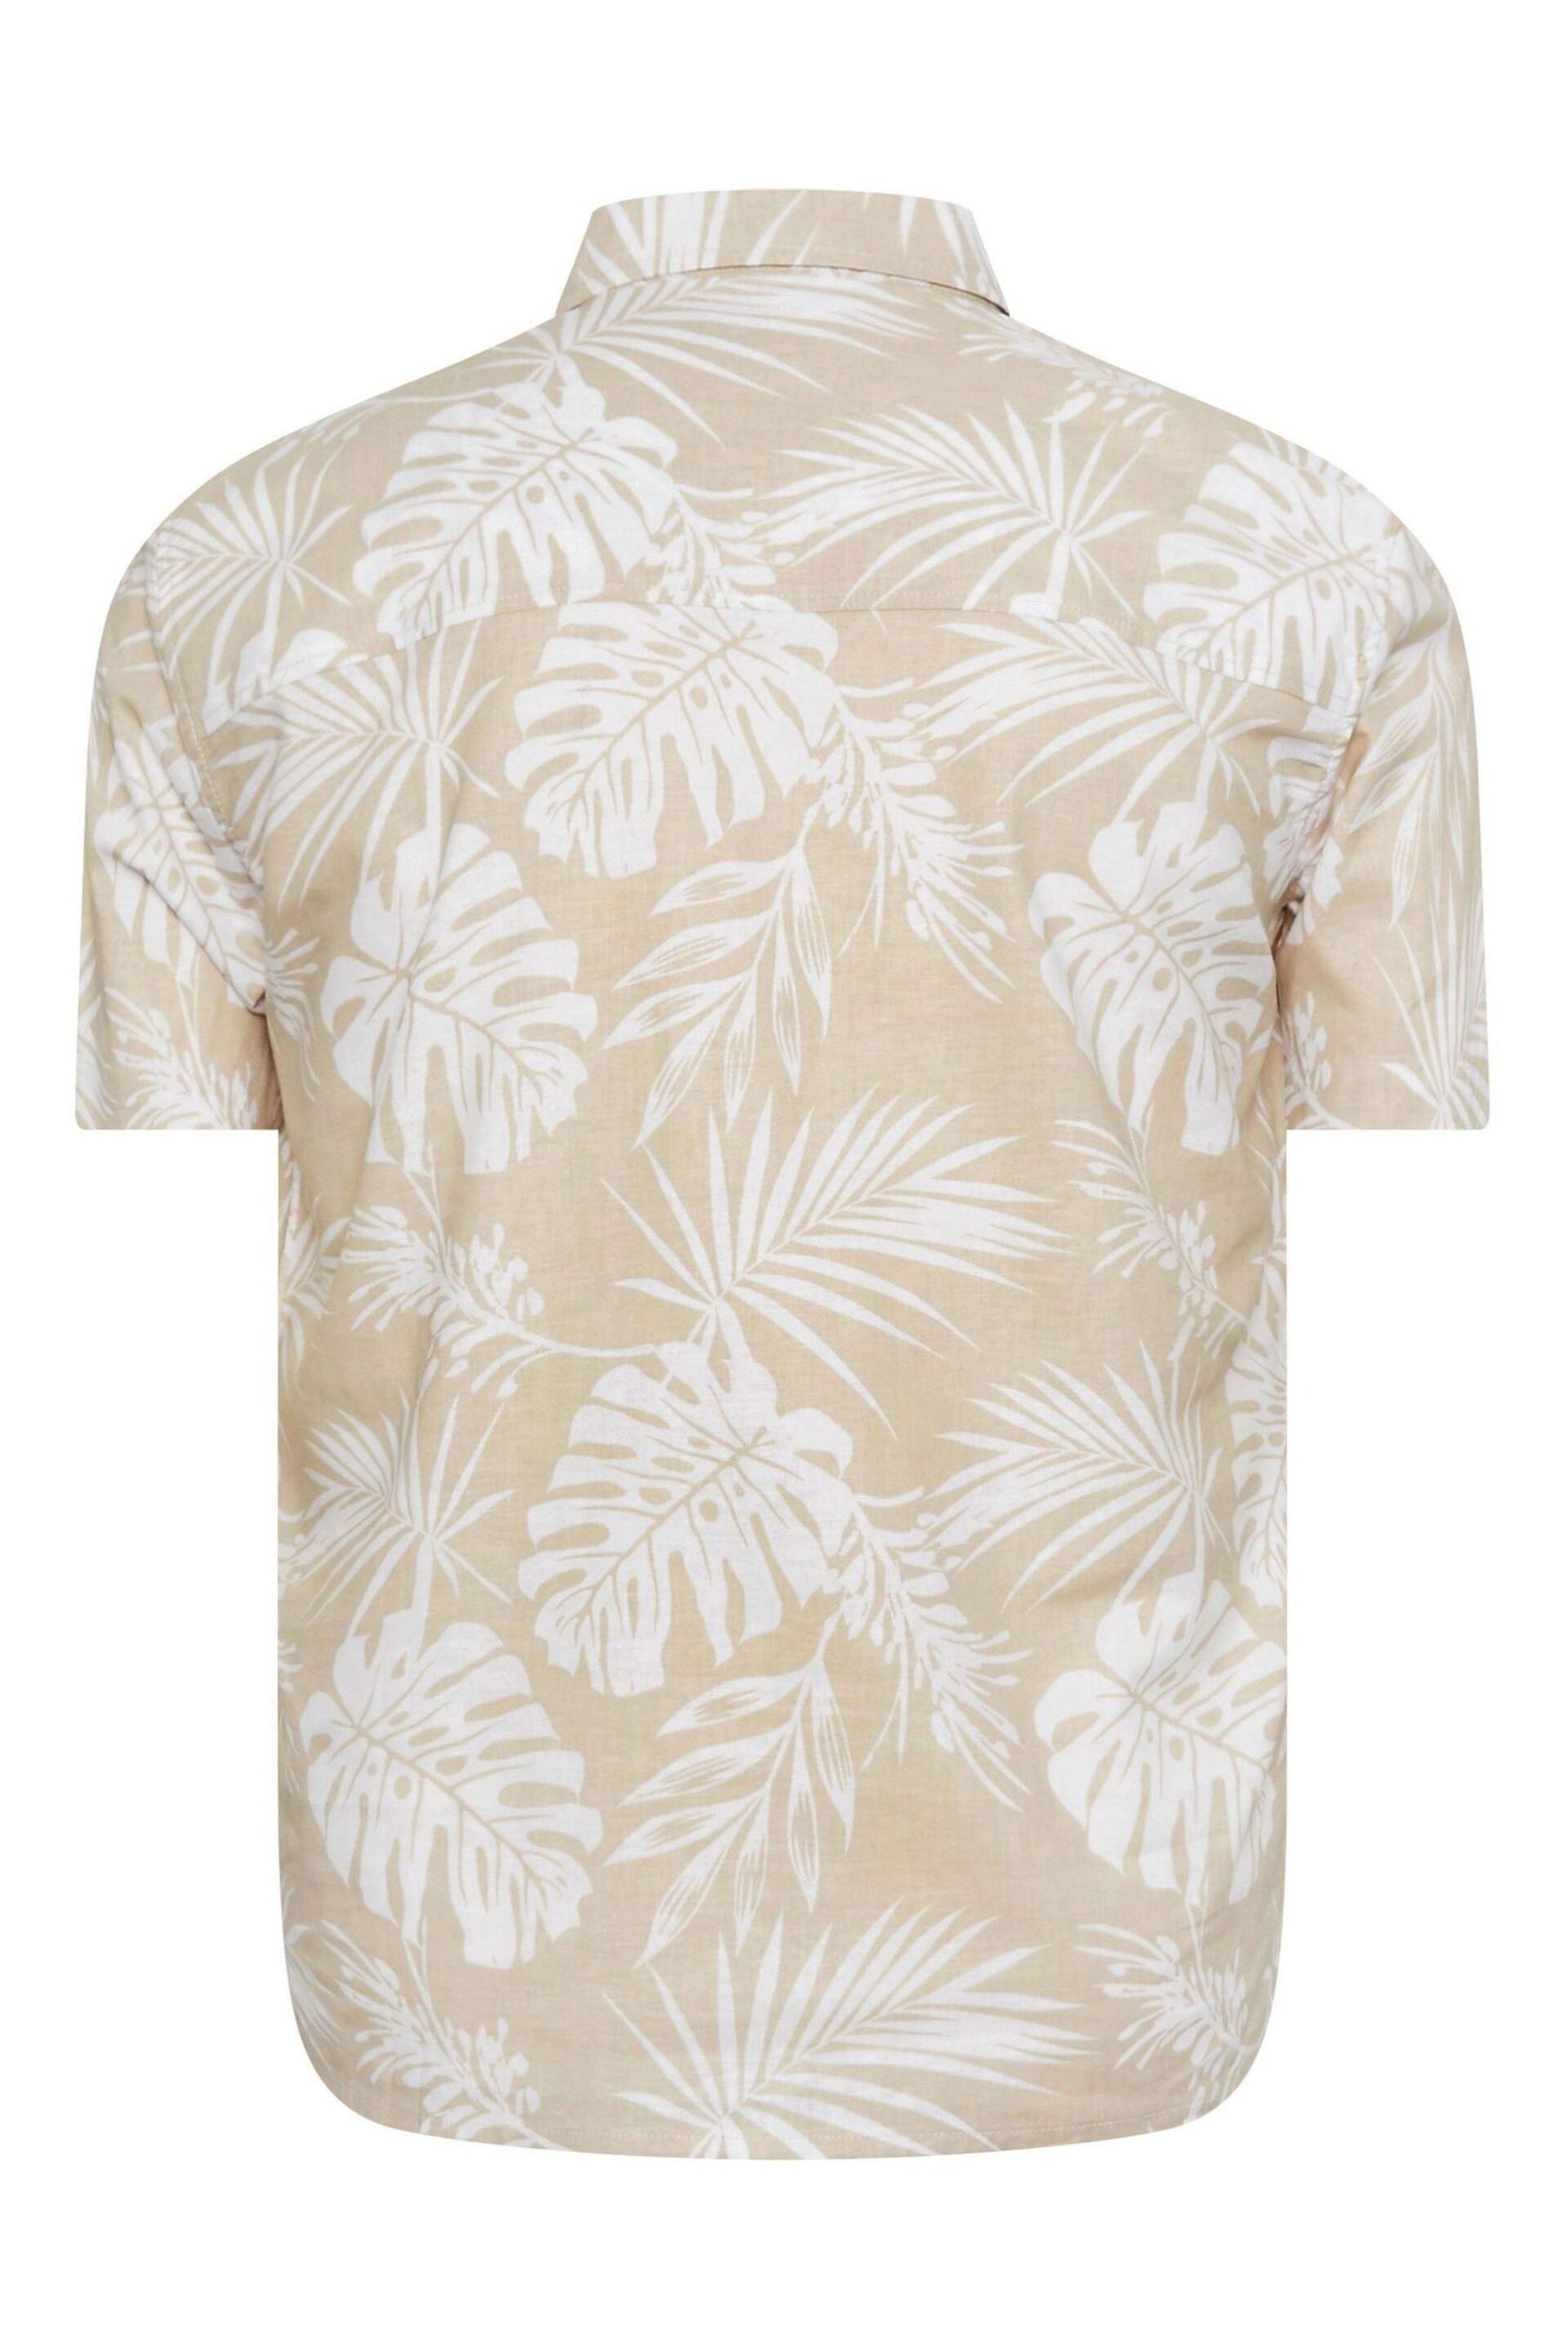 BadRhino Big & Tall Natural BadRhino Neutral Brown Premium Tropical Print Short Sleeve Linen Shirt - Image 4 of 4